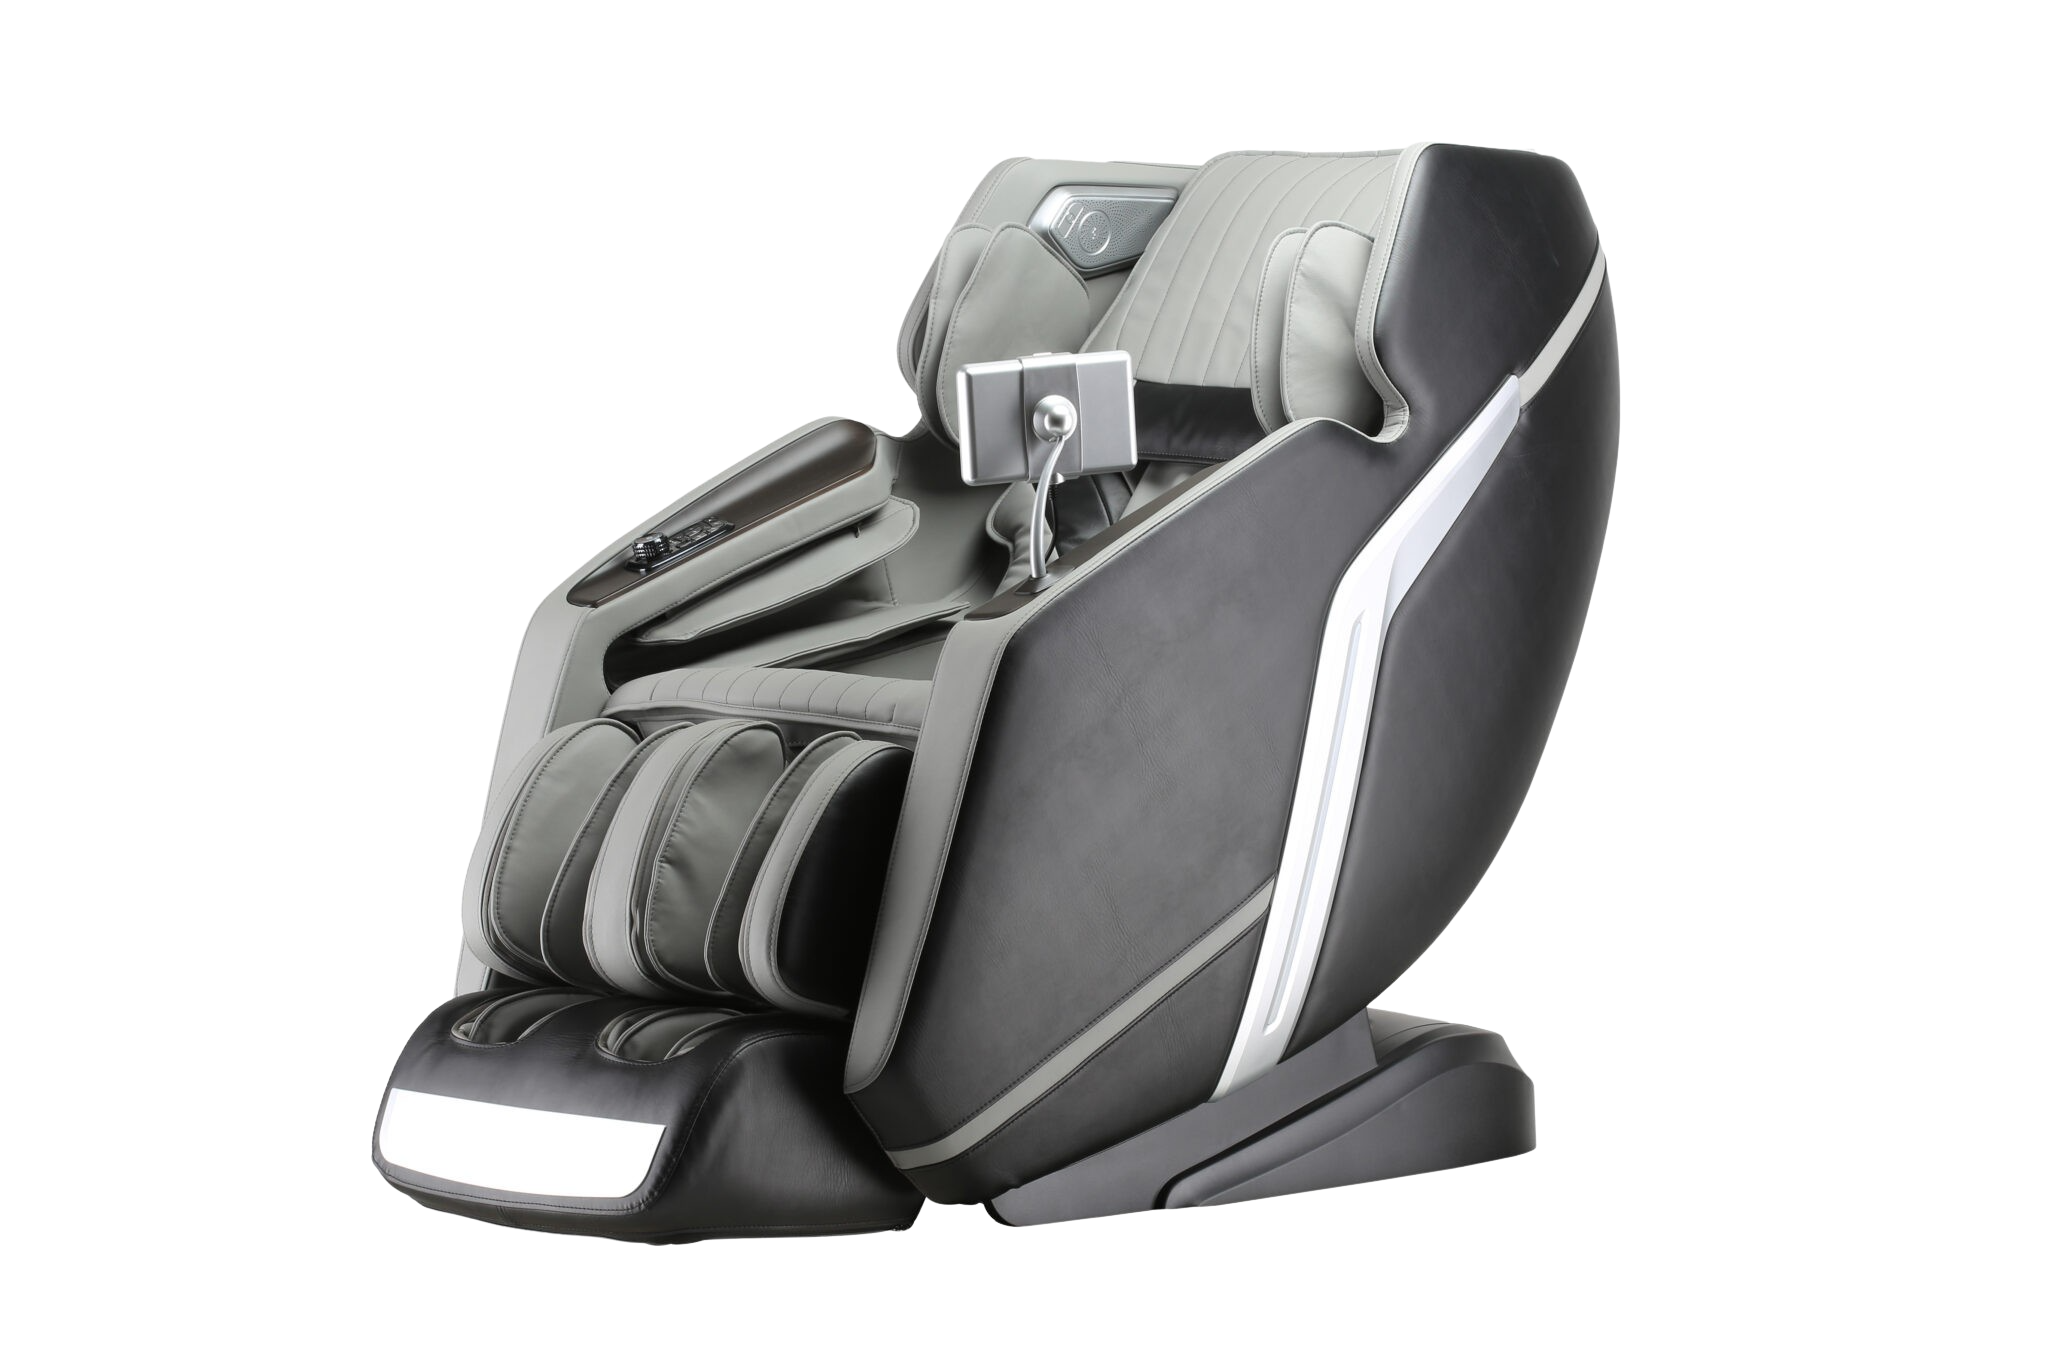 Lifesmart Luxury 4D Massage Chair Black and Gray New